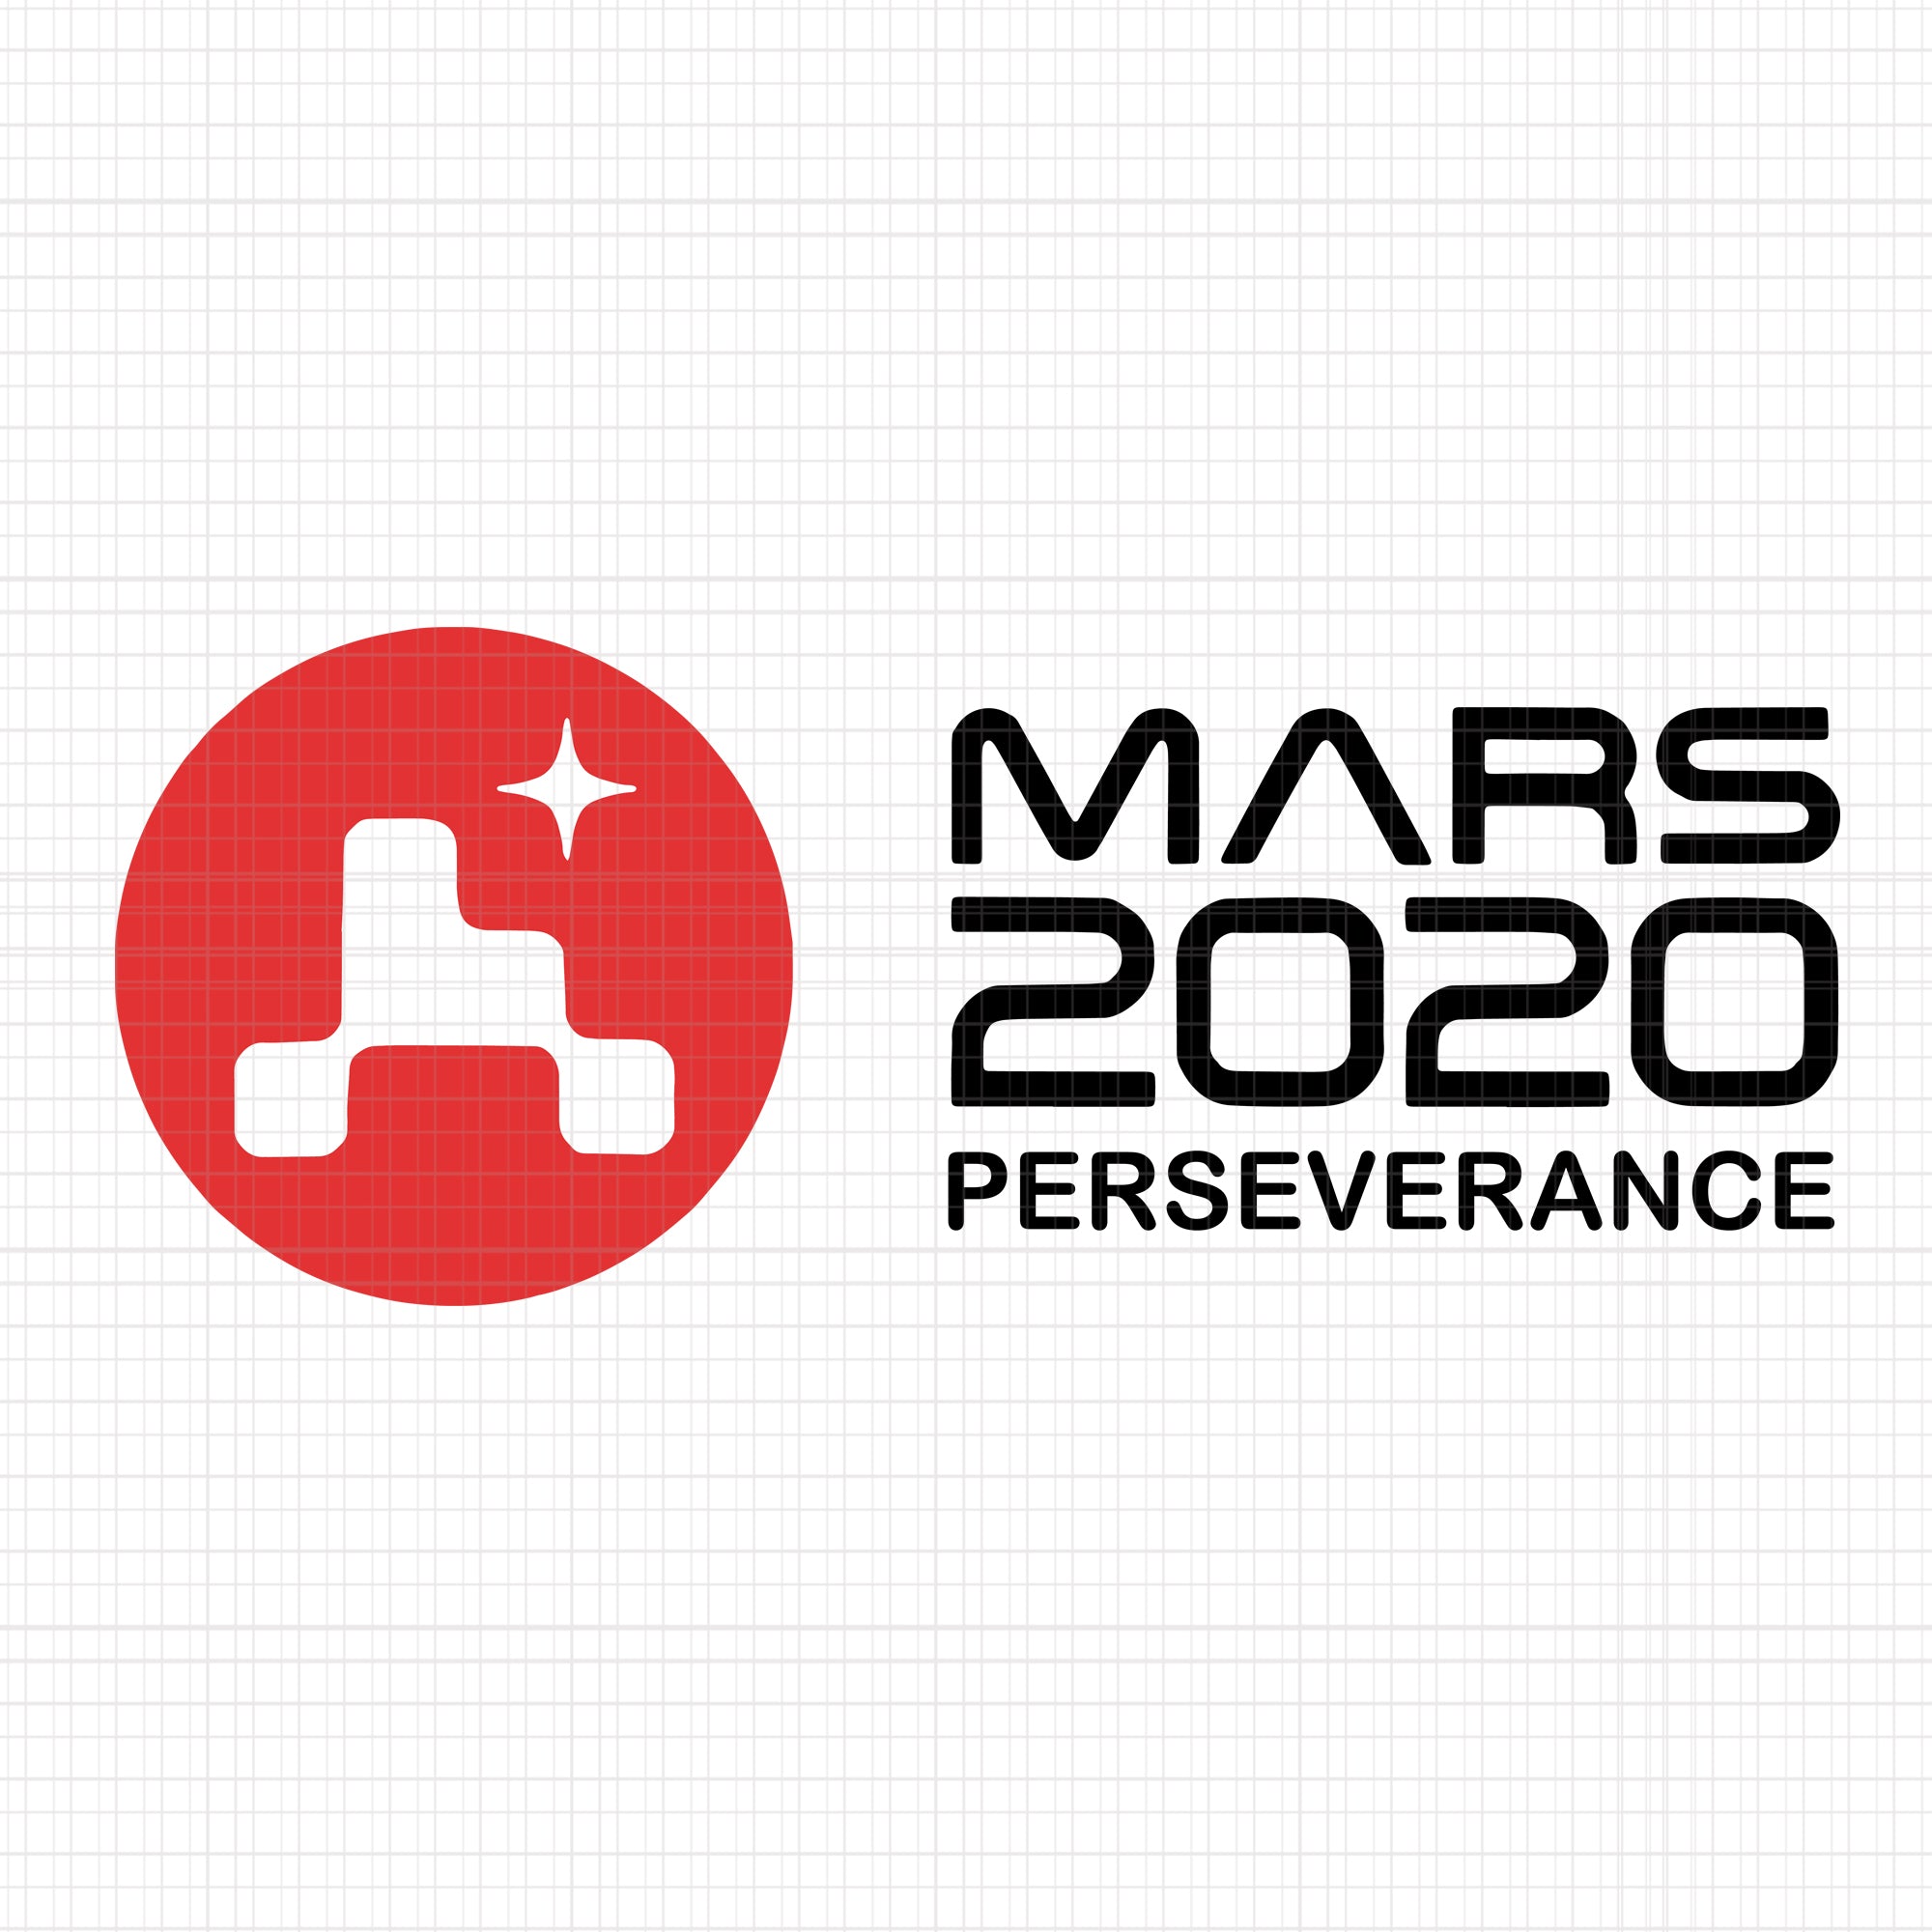 Mars 2020 Perseverance, Mars 2020 Perseverance  svg, Mars 2020 , Mars 2020 Perseverance Rover Launch Day Commemorative